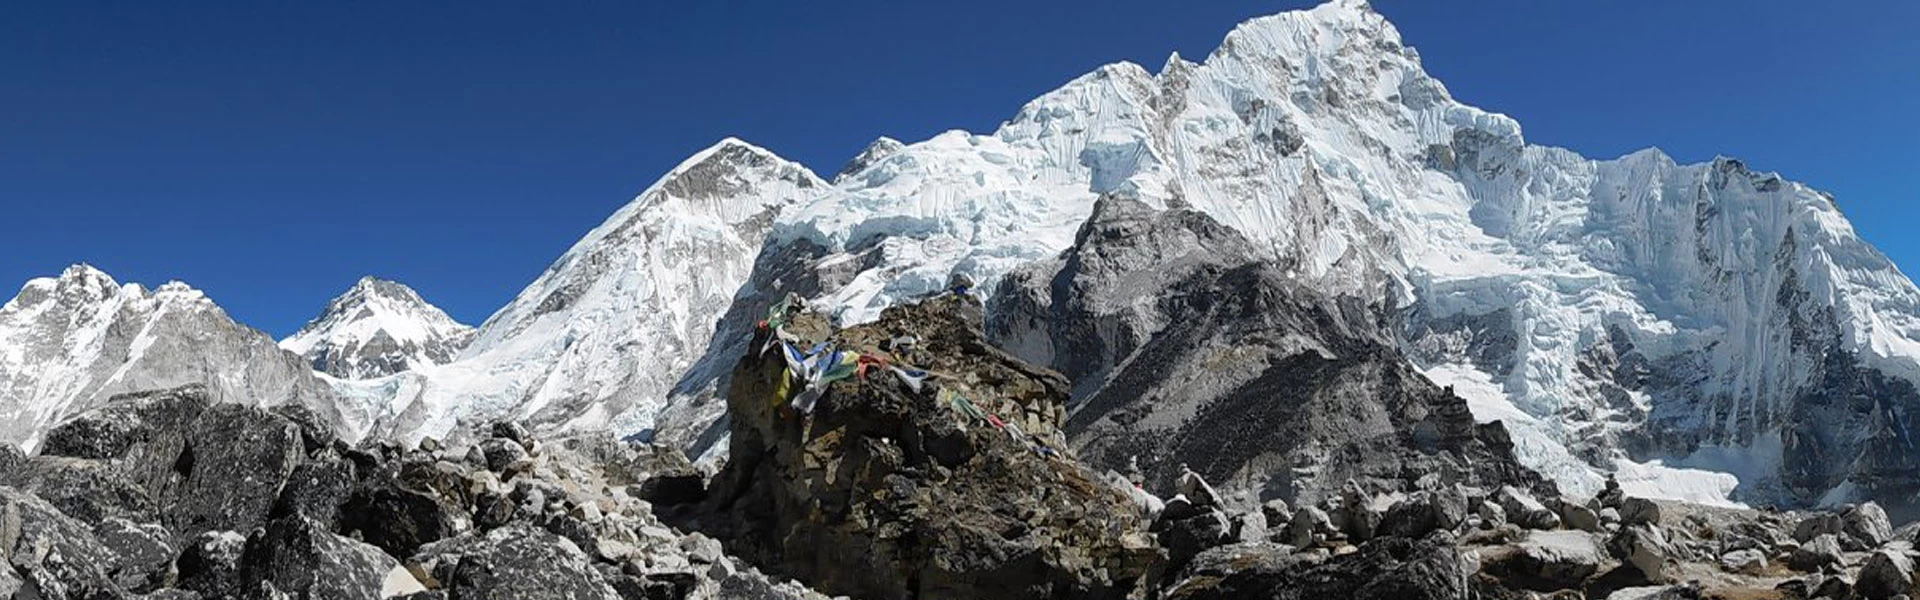 Khumbu Region Himalayas